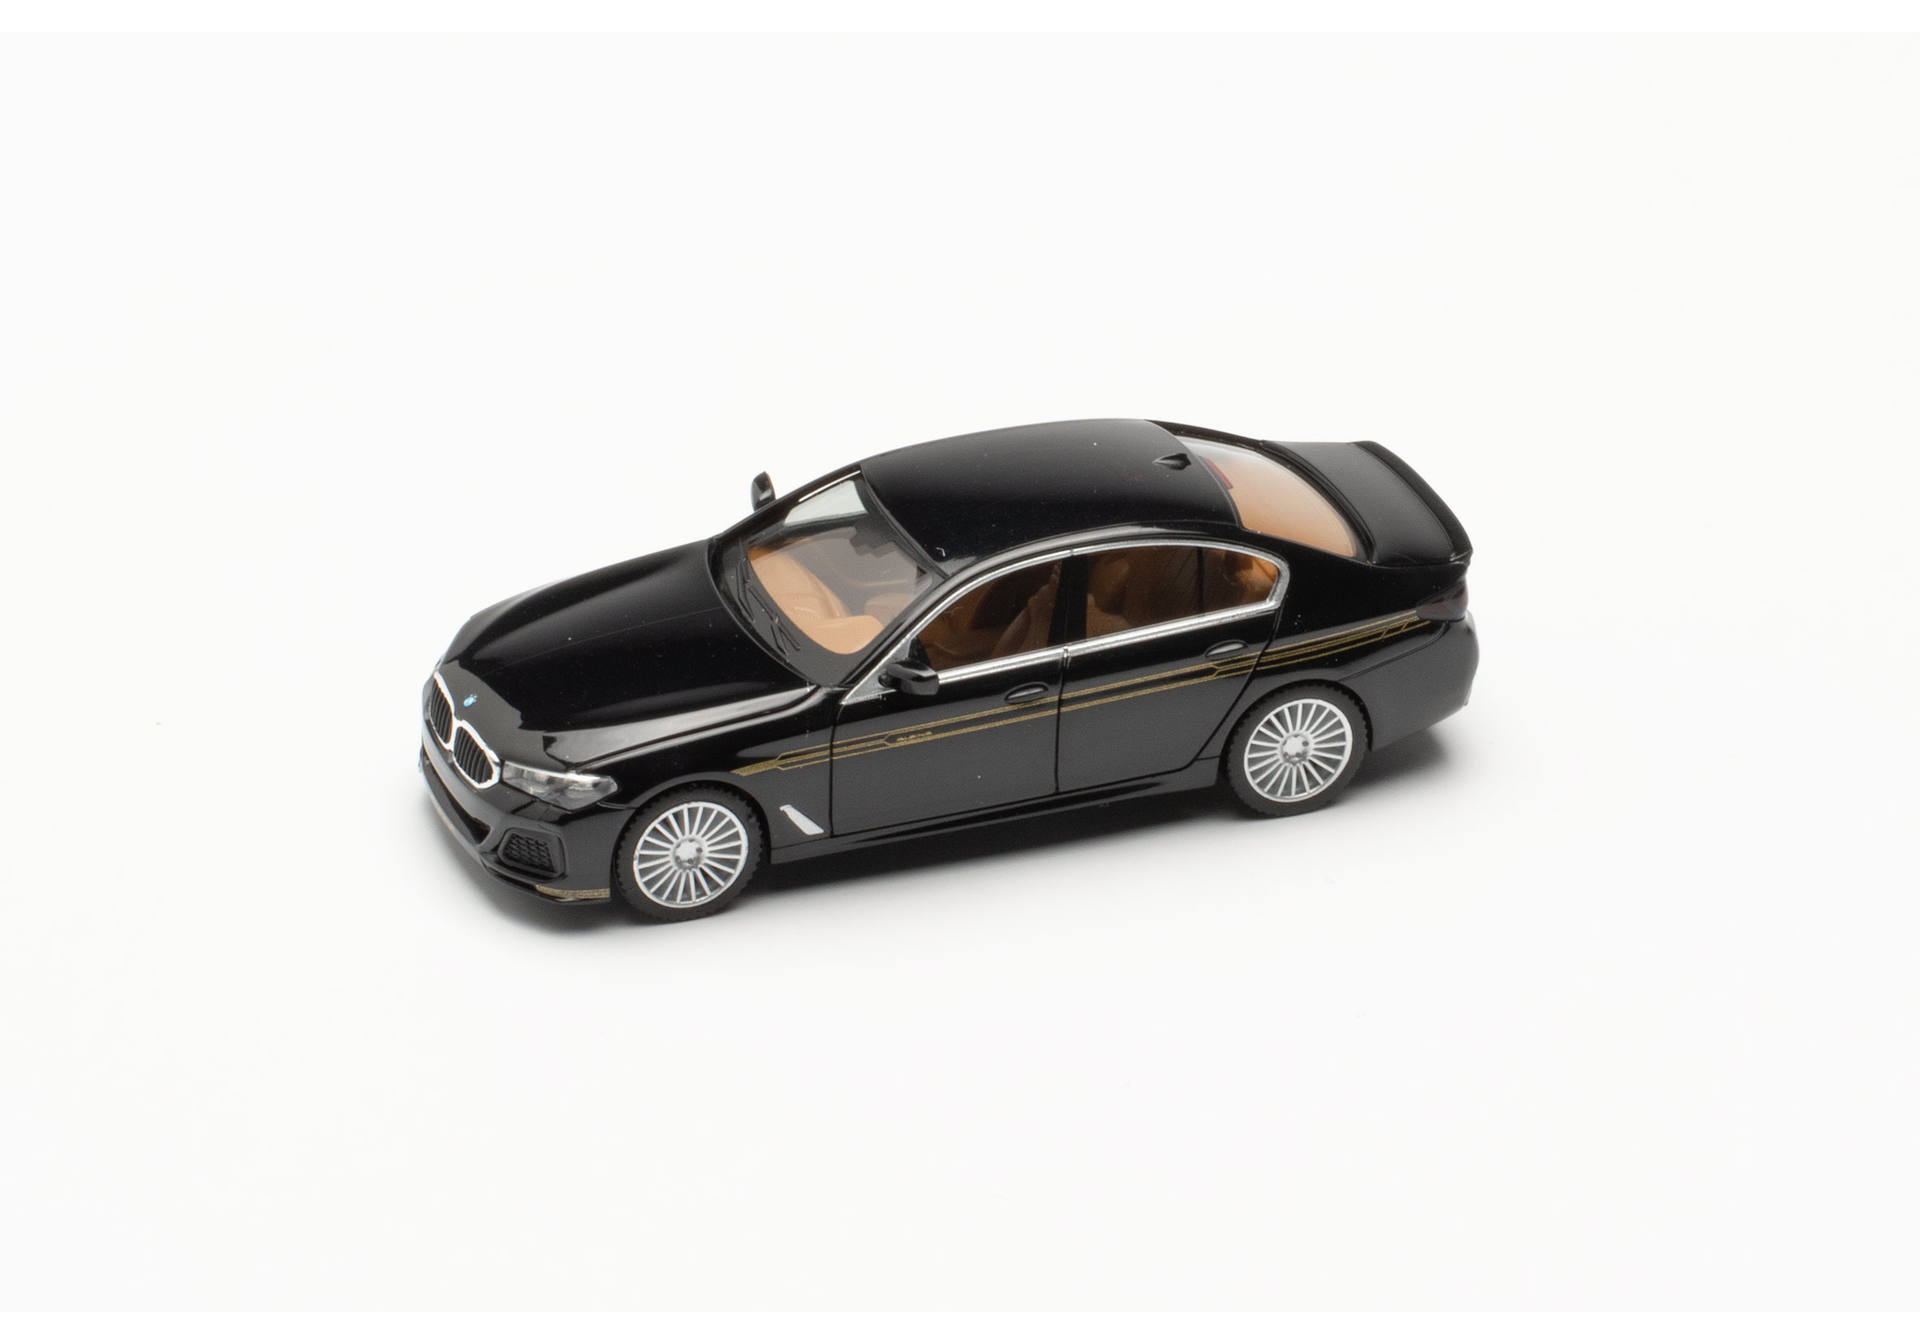 BMW Alpina B5 limousine, black